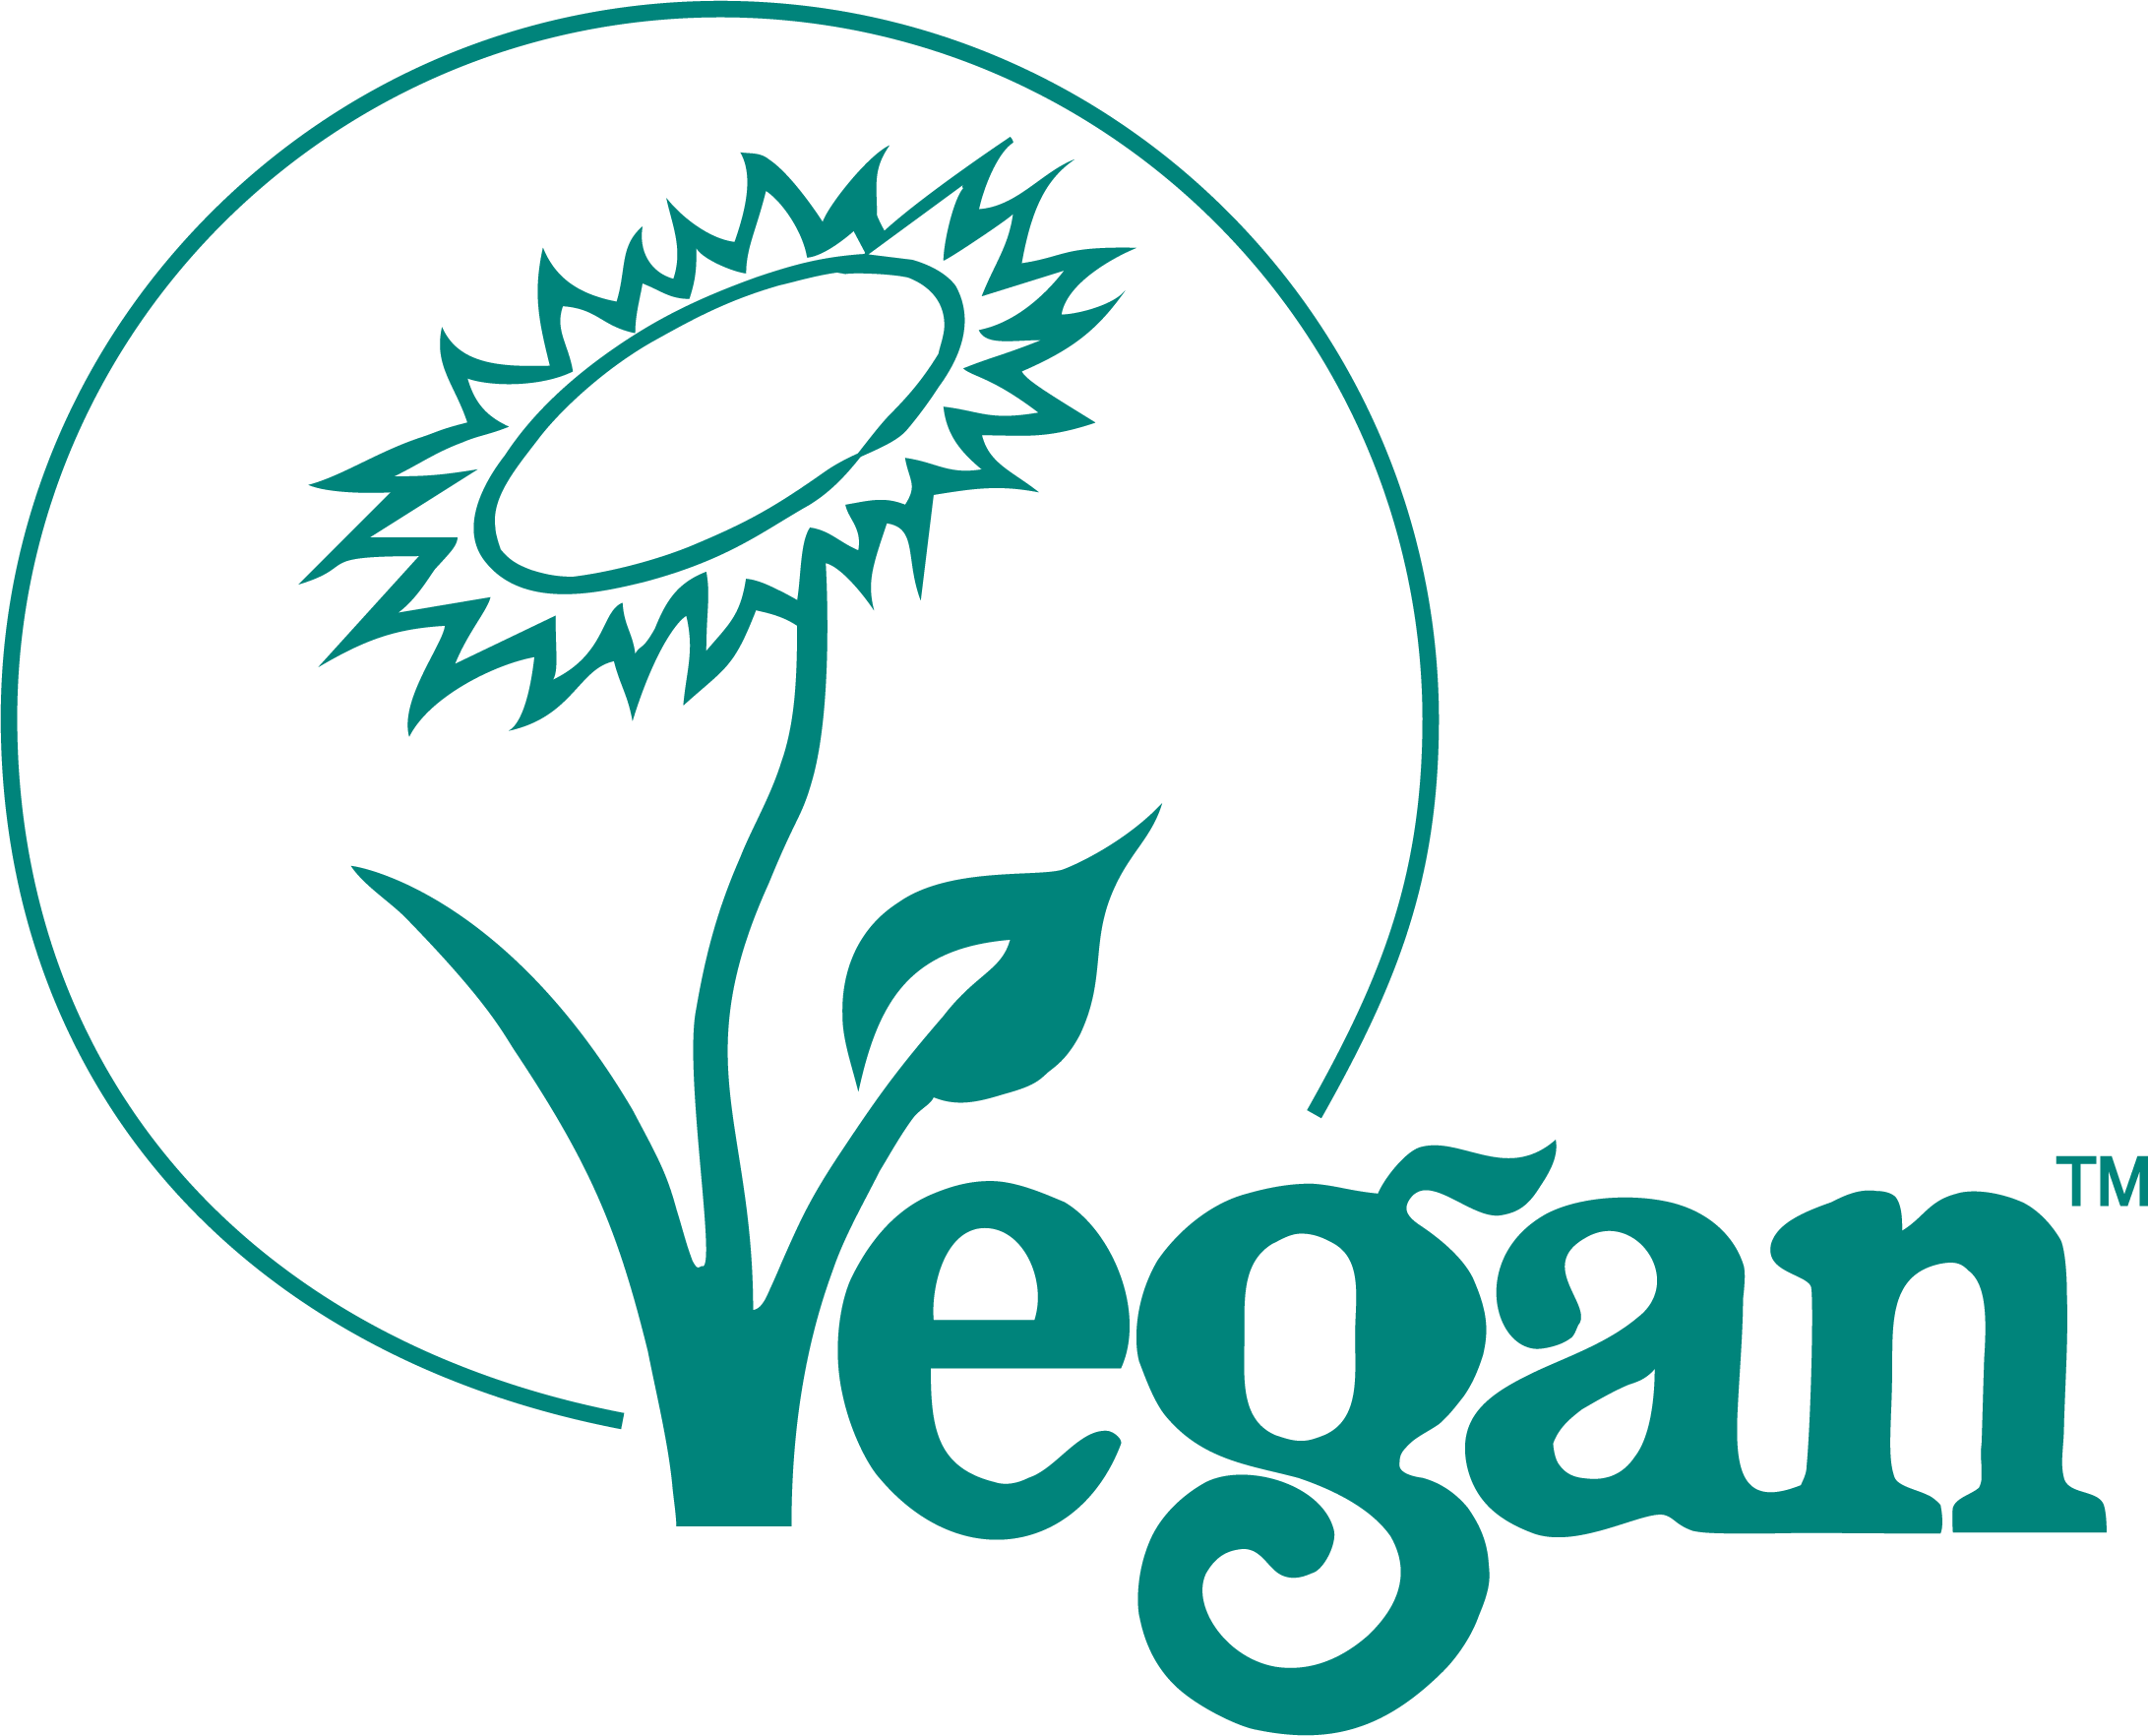 The Vegan Trademark